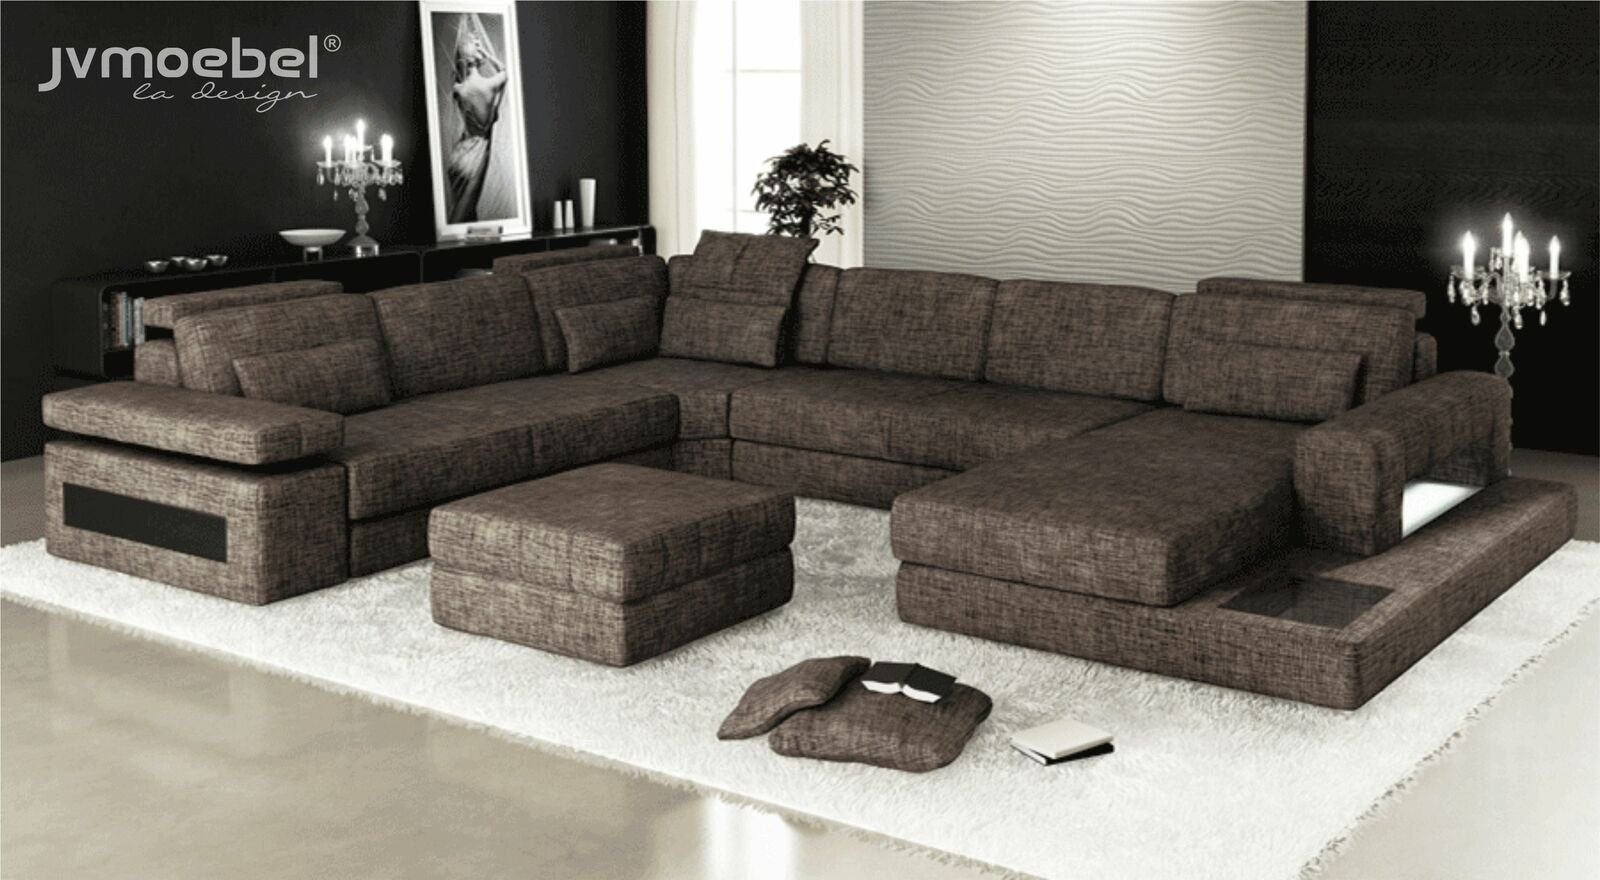 Wohnlandschaft, Ecksofa Couch Stoff U-Form Textil Polster Europe Eck JVmoebel Design Ecksofa Made in